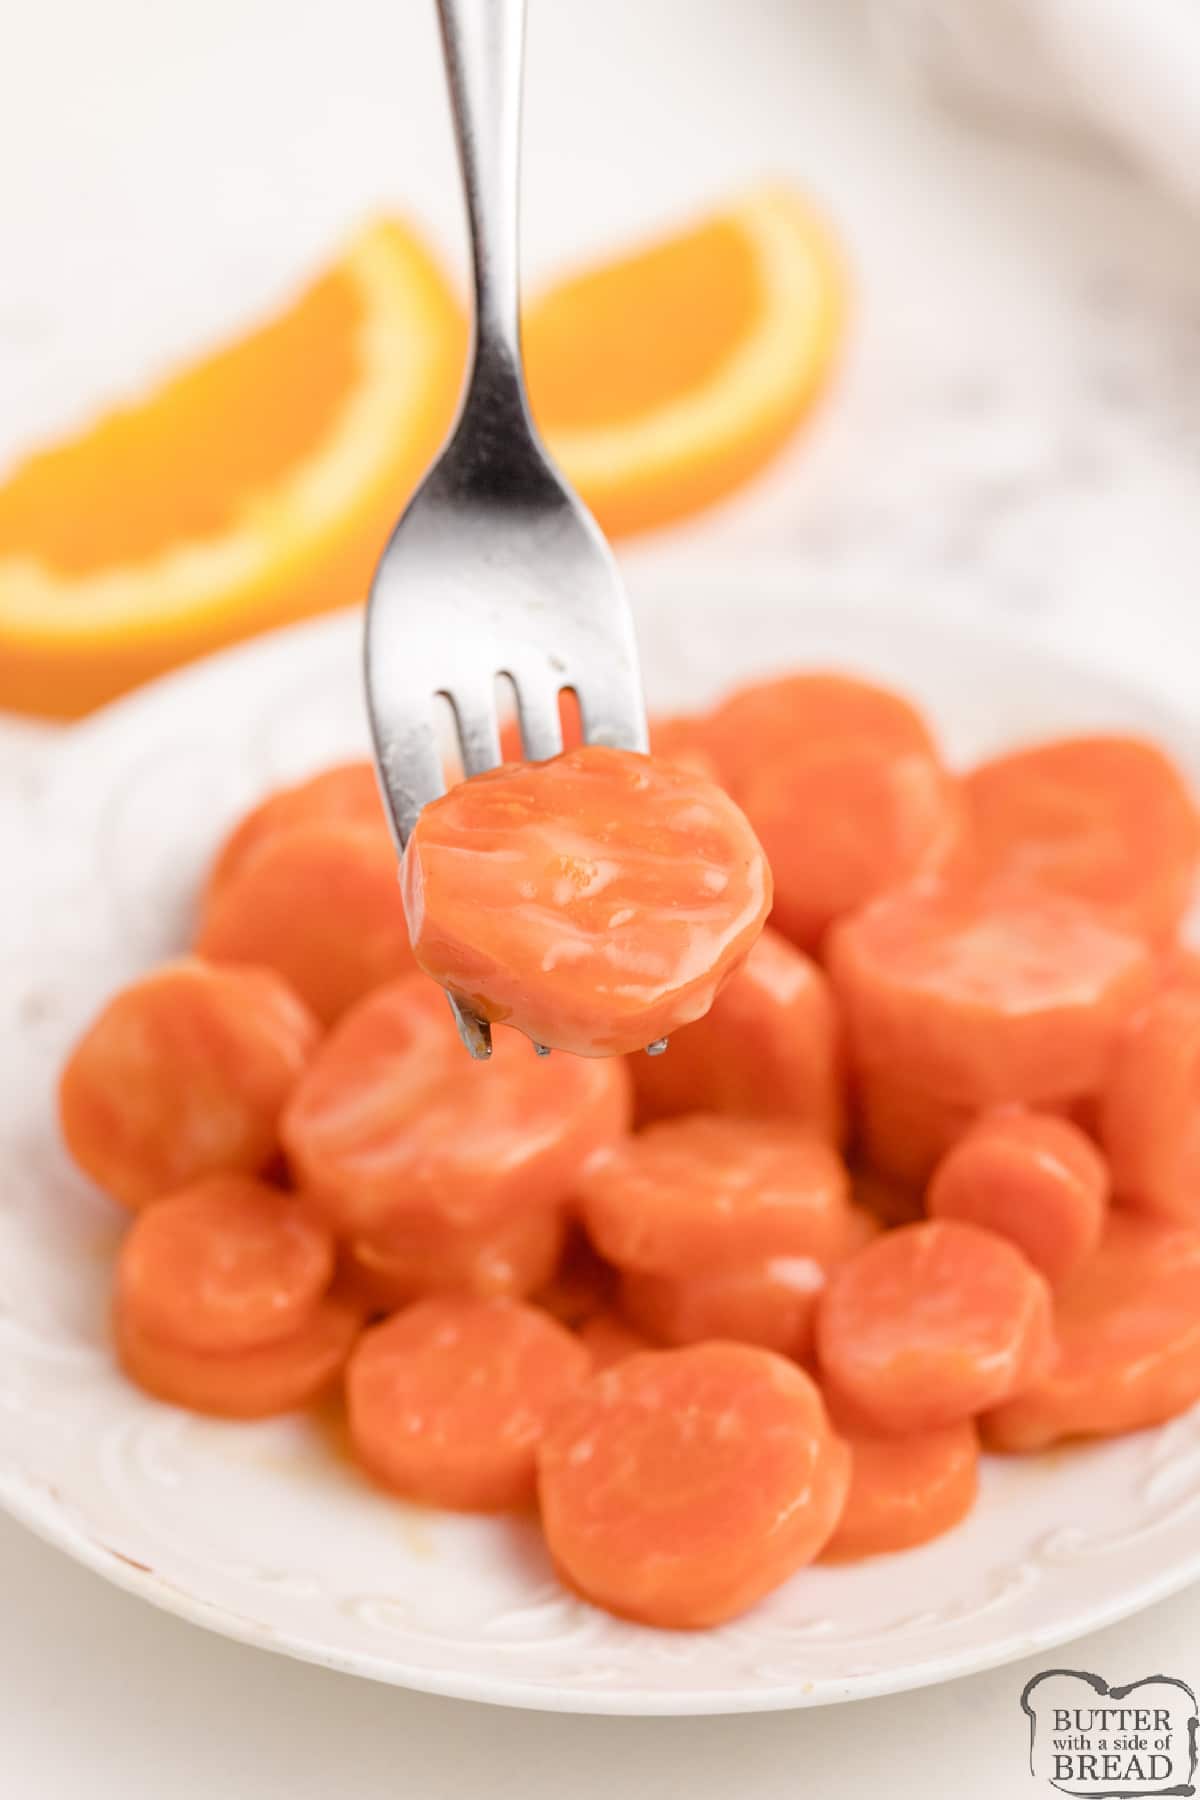 Tender carrots coated in a simple orange glaze